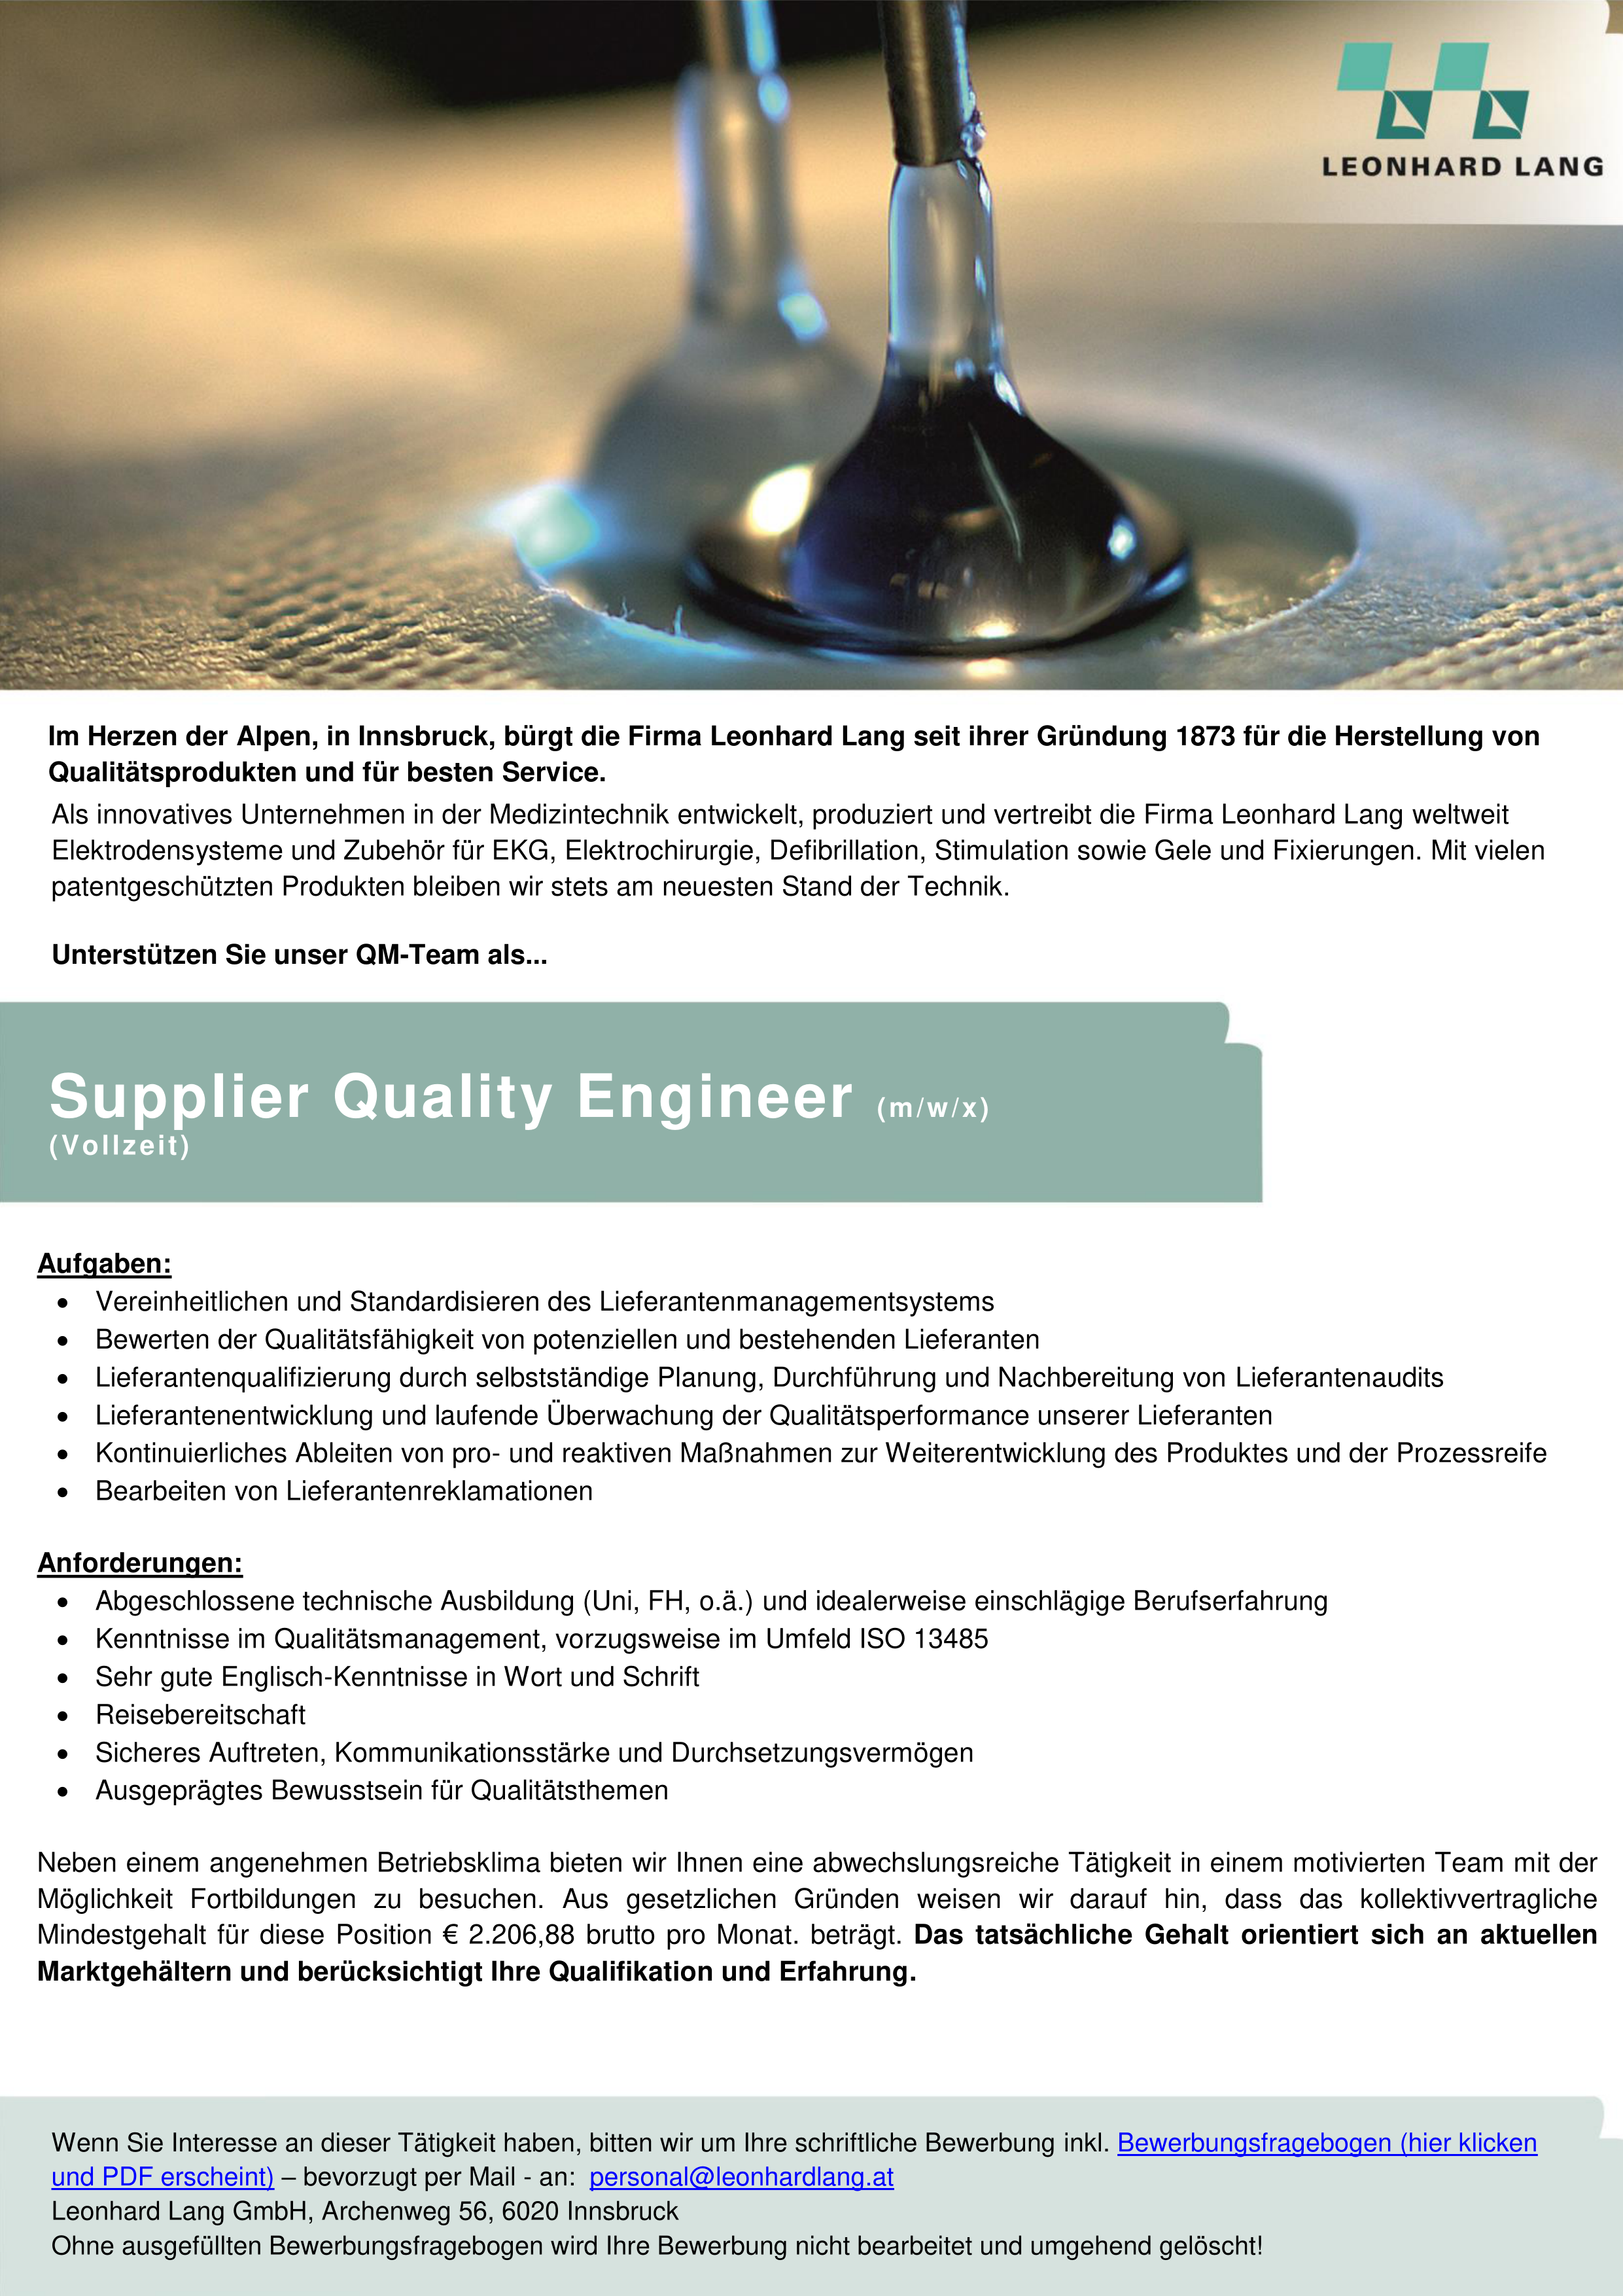 Supplier Quality Engineer (m/w/x) 